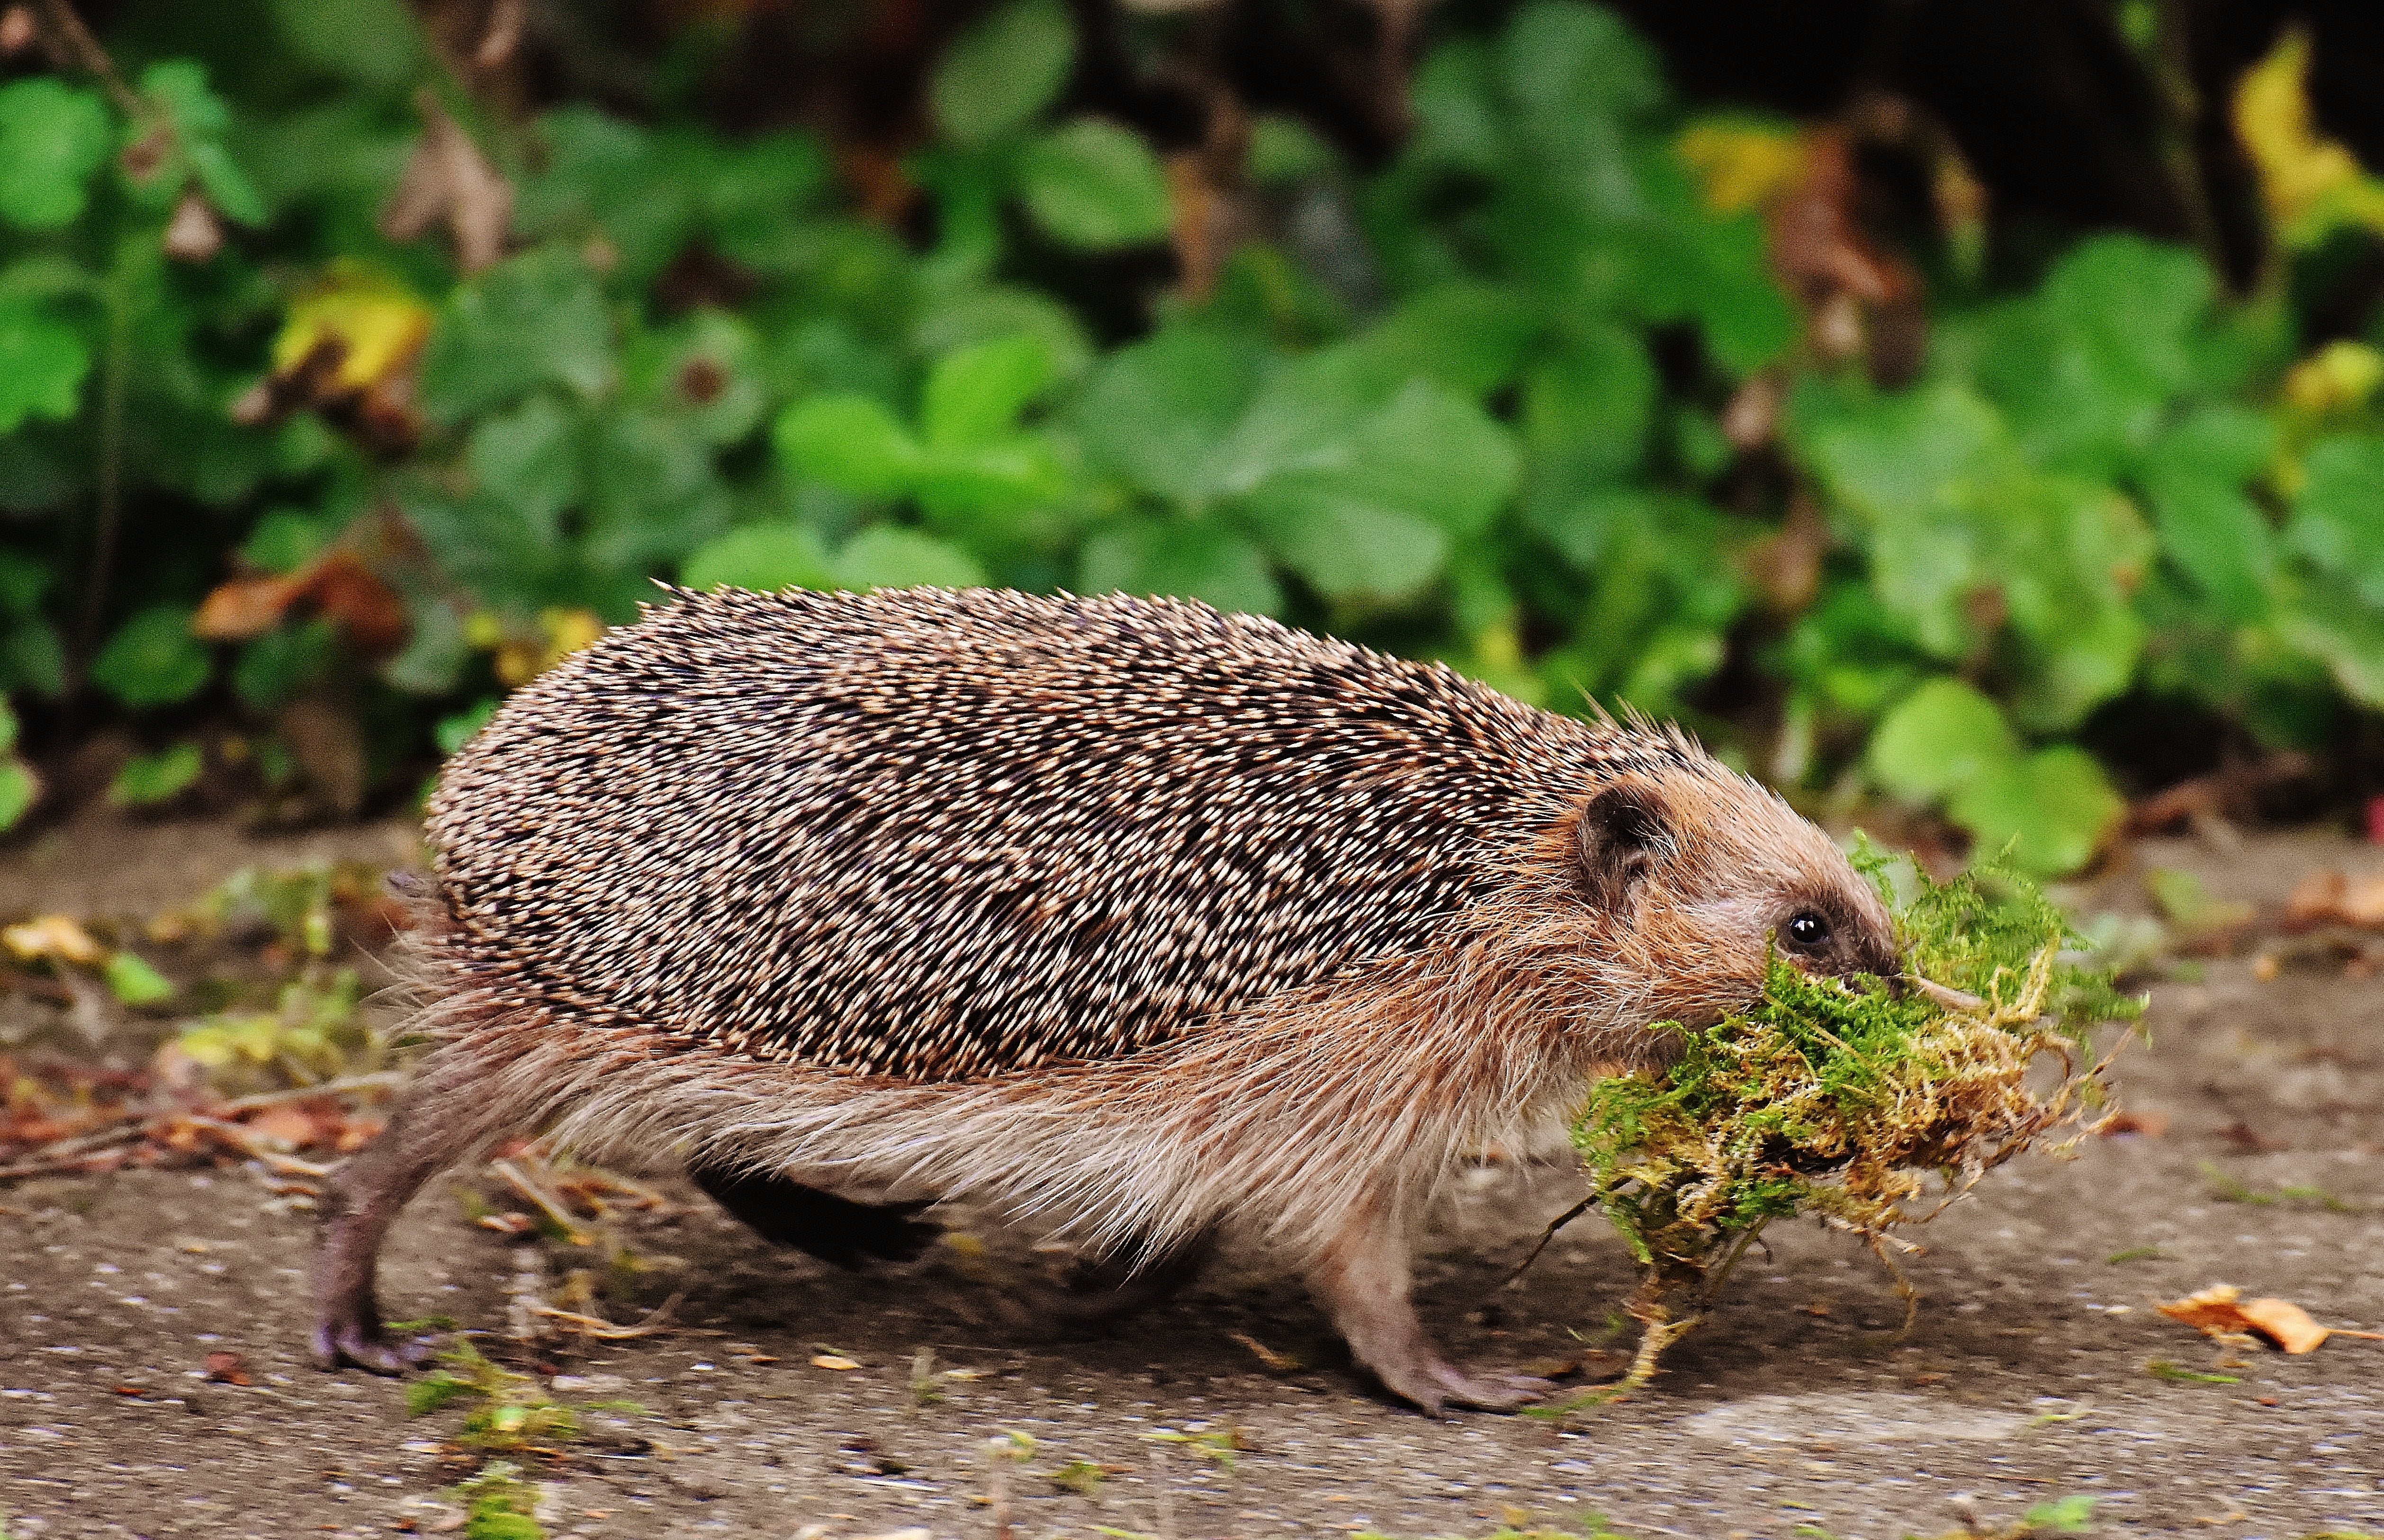 brown porcupine, hedgehog, moss, walk, thorns, animal, wildlife